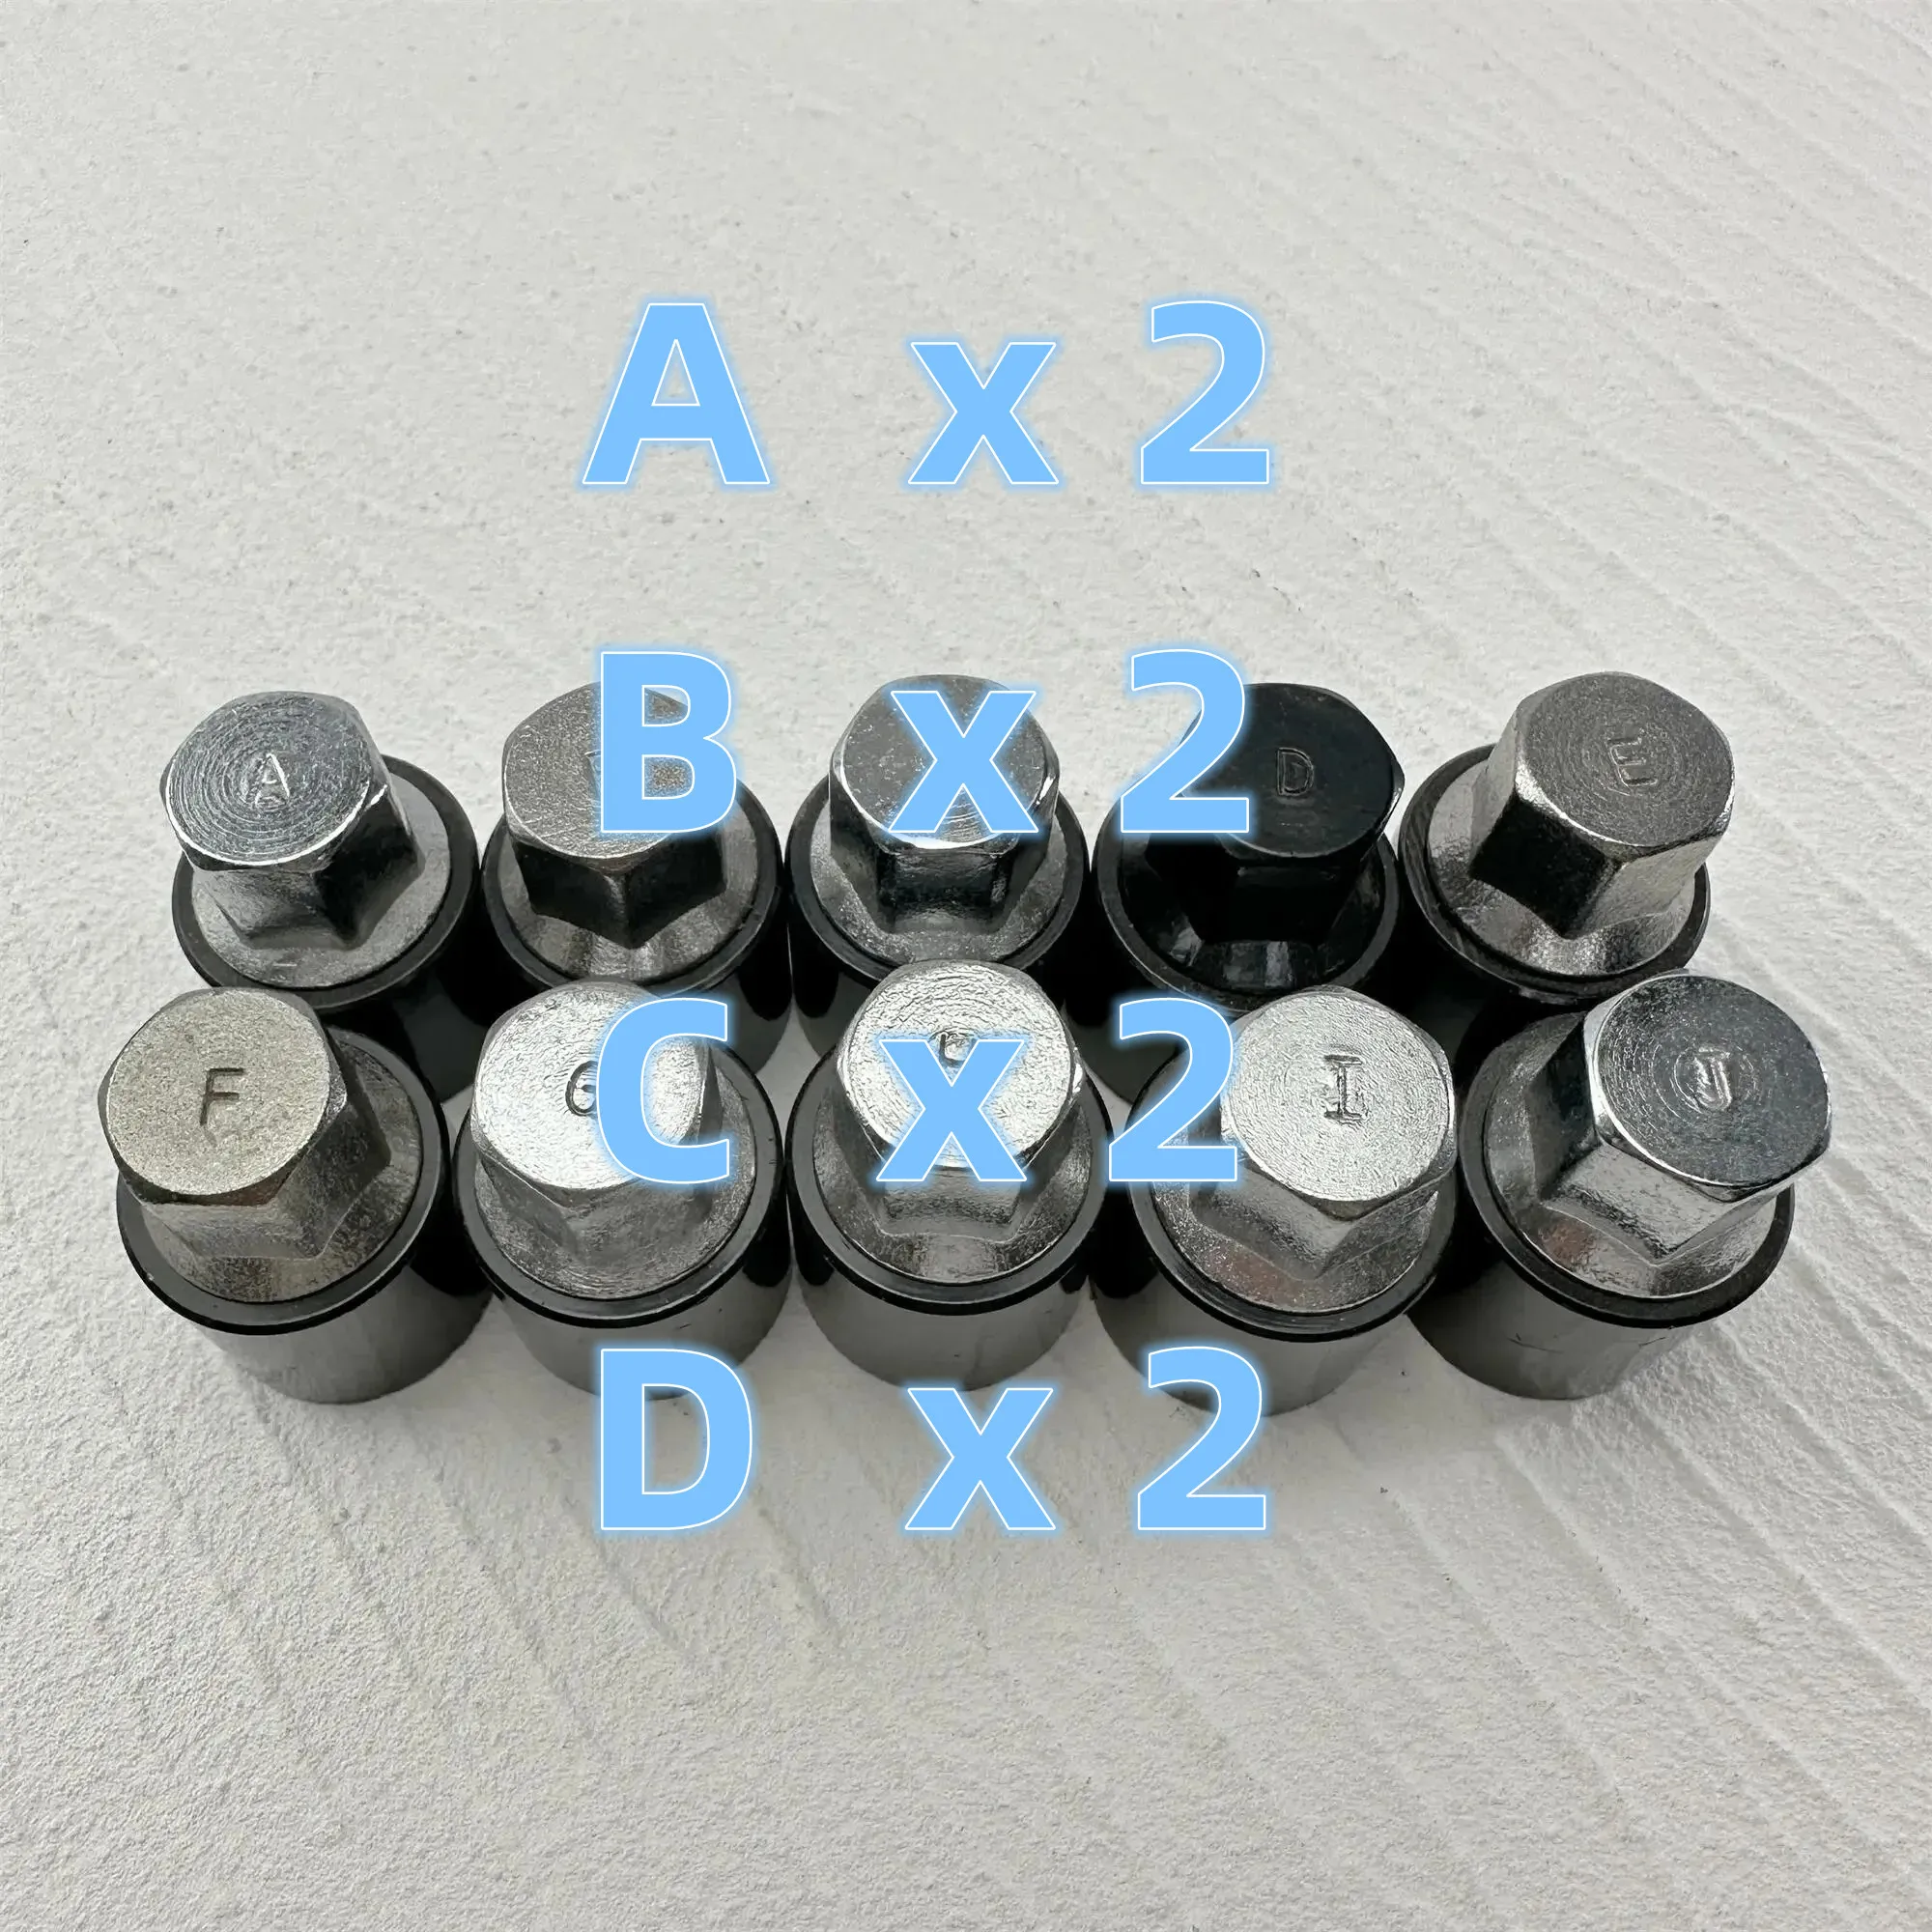 abcd-x-2-bolt-boss-anti-theft-screw-set-wheel-anti-theft-screw-removal-tool-key-for-toyota-kurozek-senna-tanto-prado-type